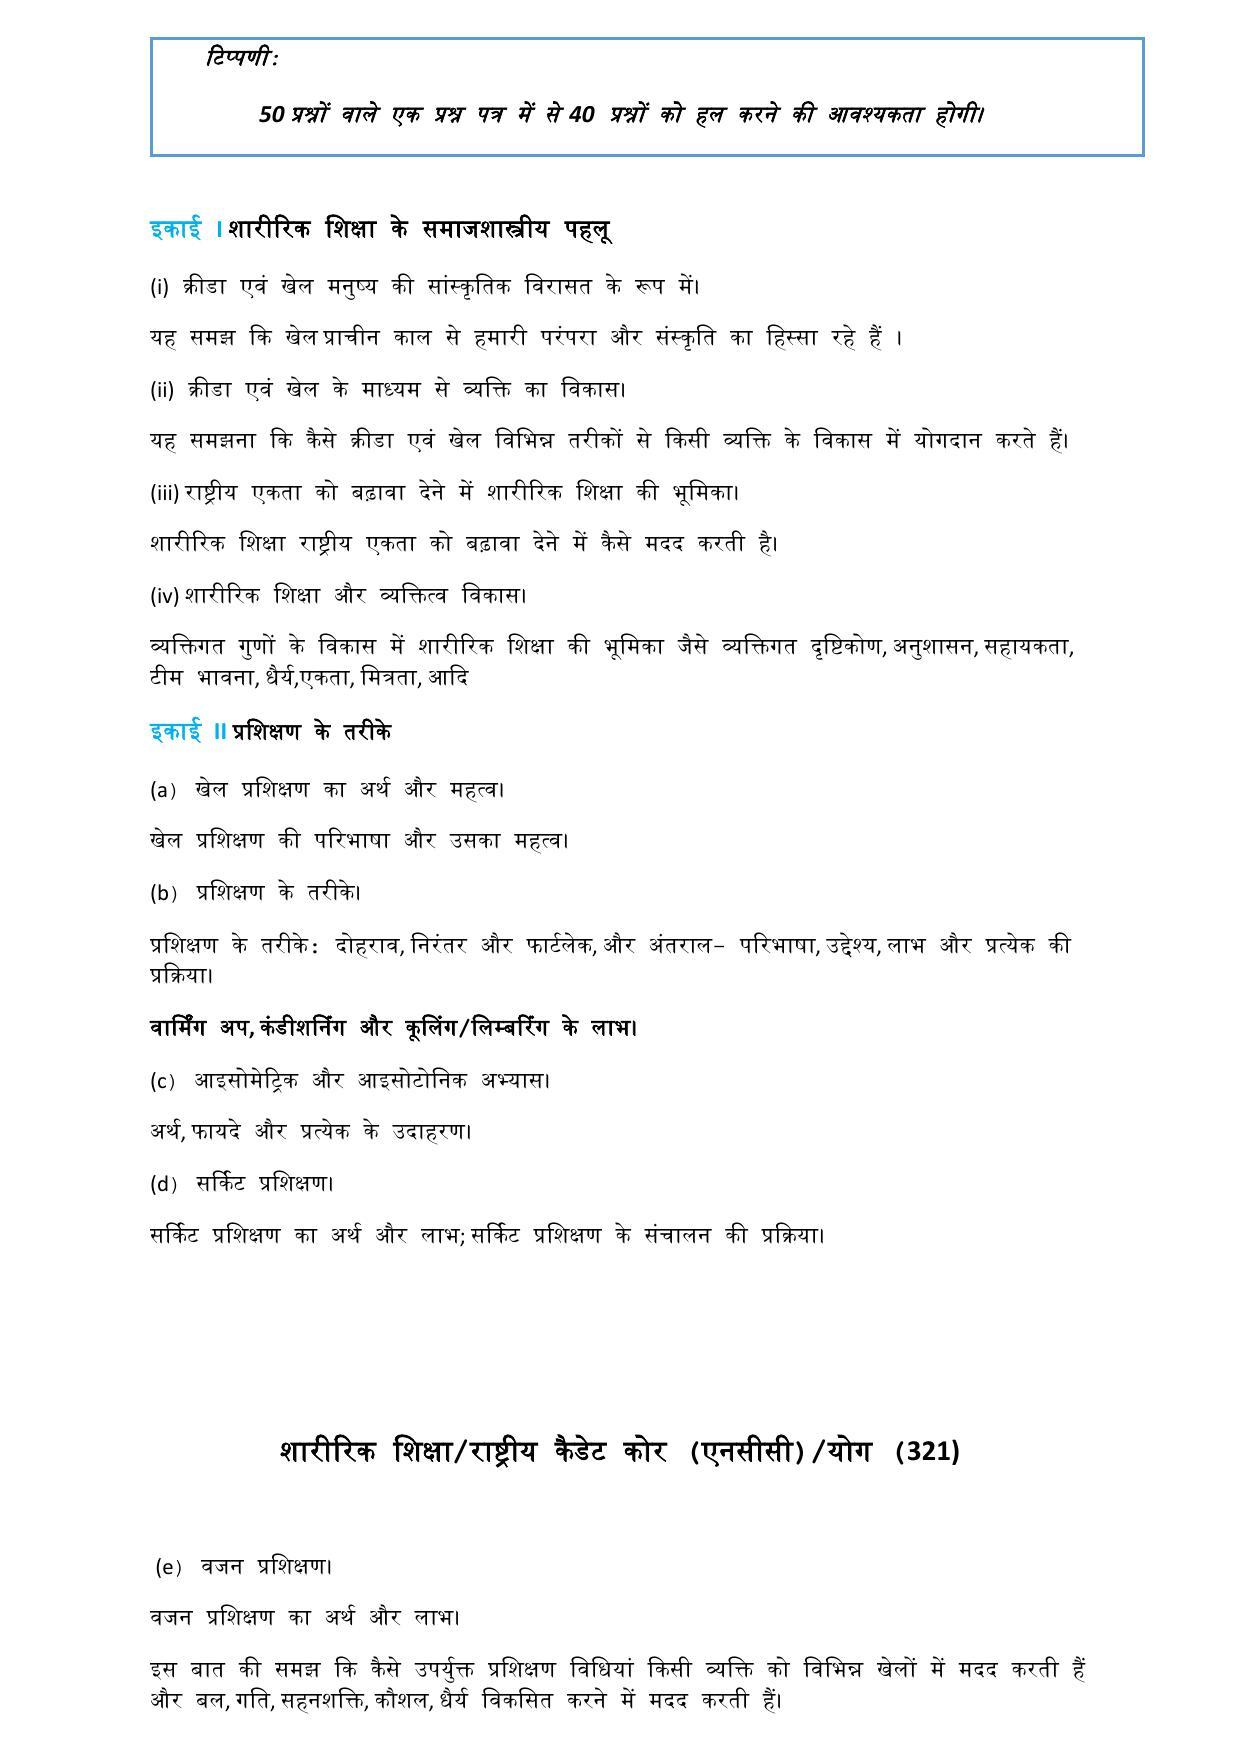 CUET Syllabus for Physical Education (Hindi) - Page 2